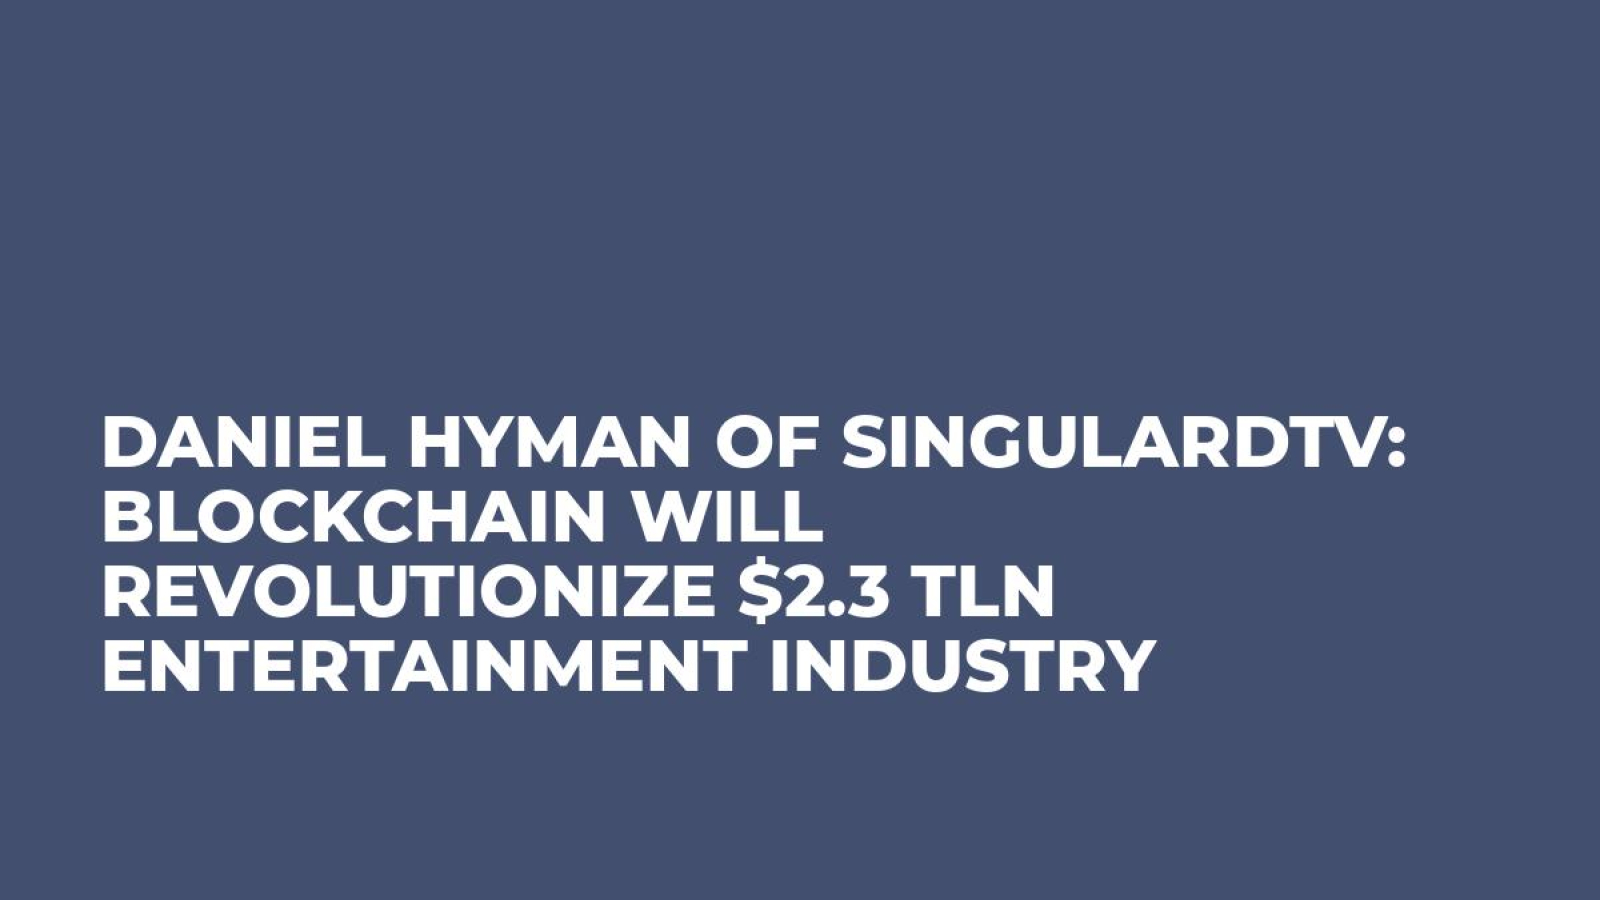 Daniel Hyman of SingularDTV: Blockchain Will Revolutionize $2.3 tln Entertainment Industry 